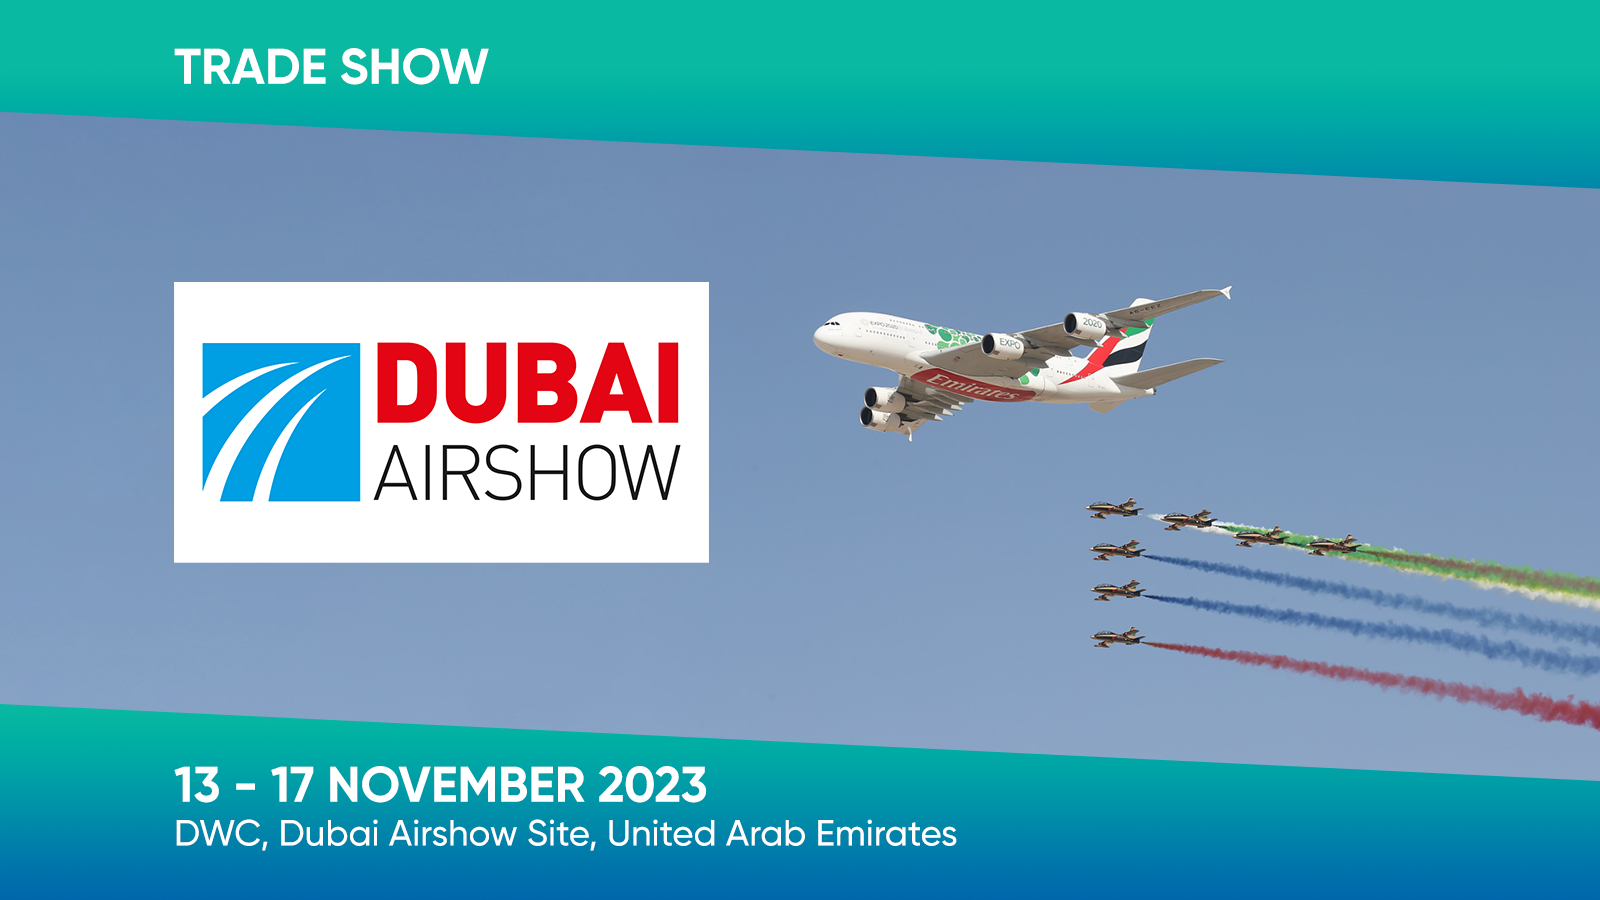 Dubai Airshow 2023 1317 November